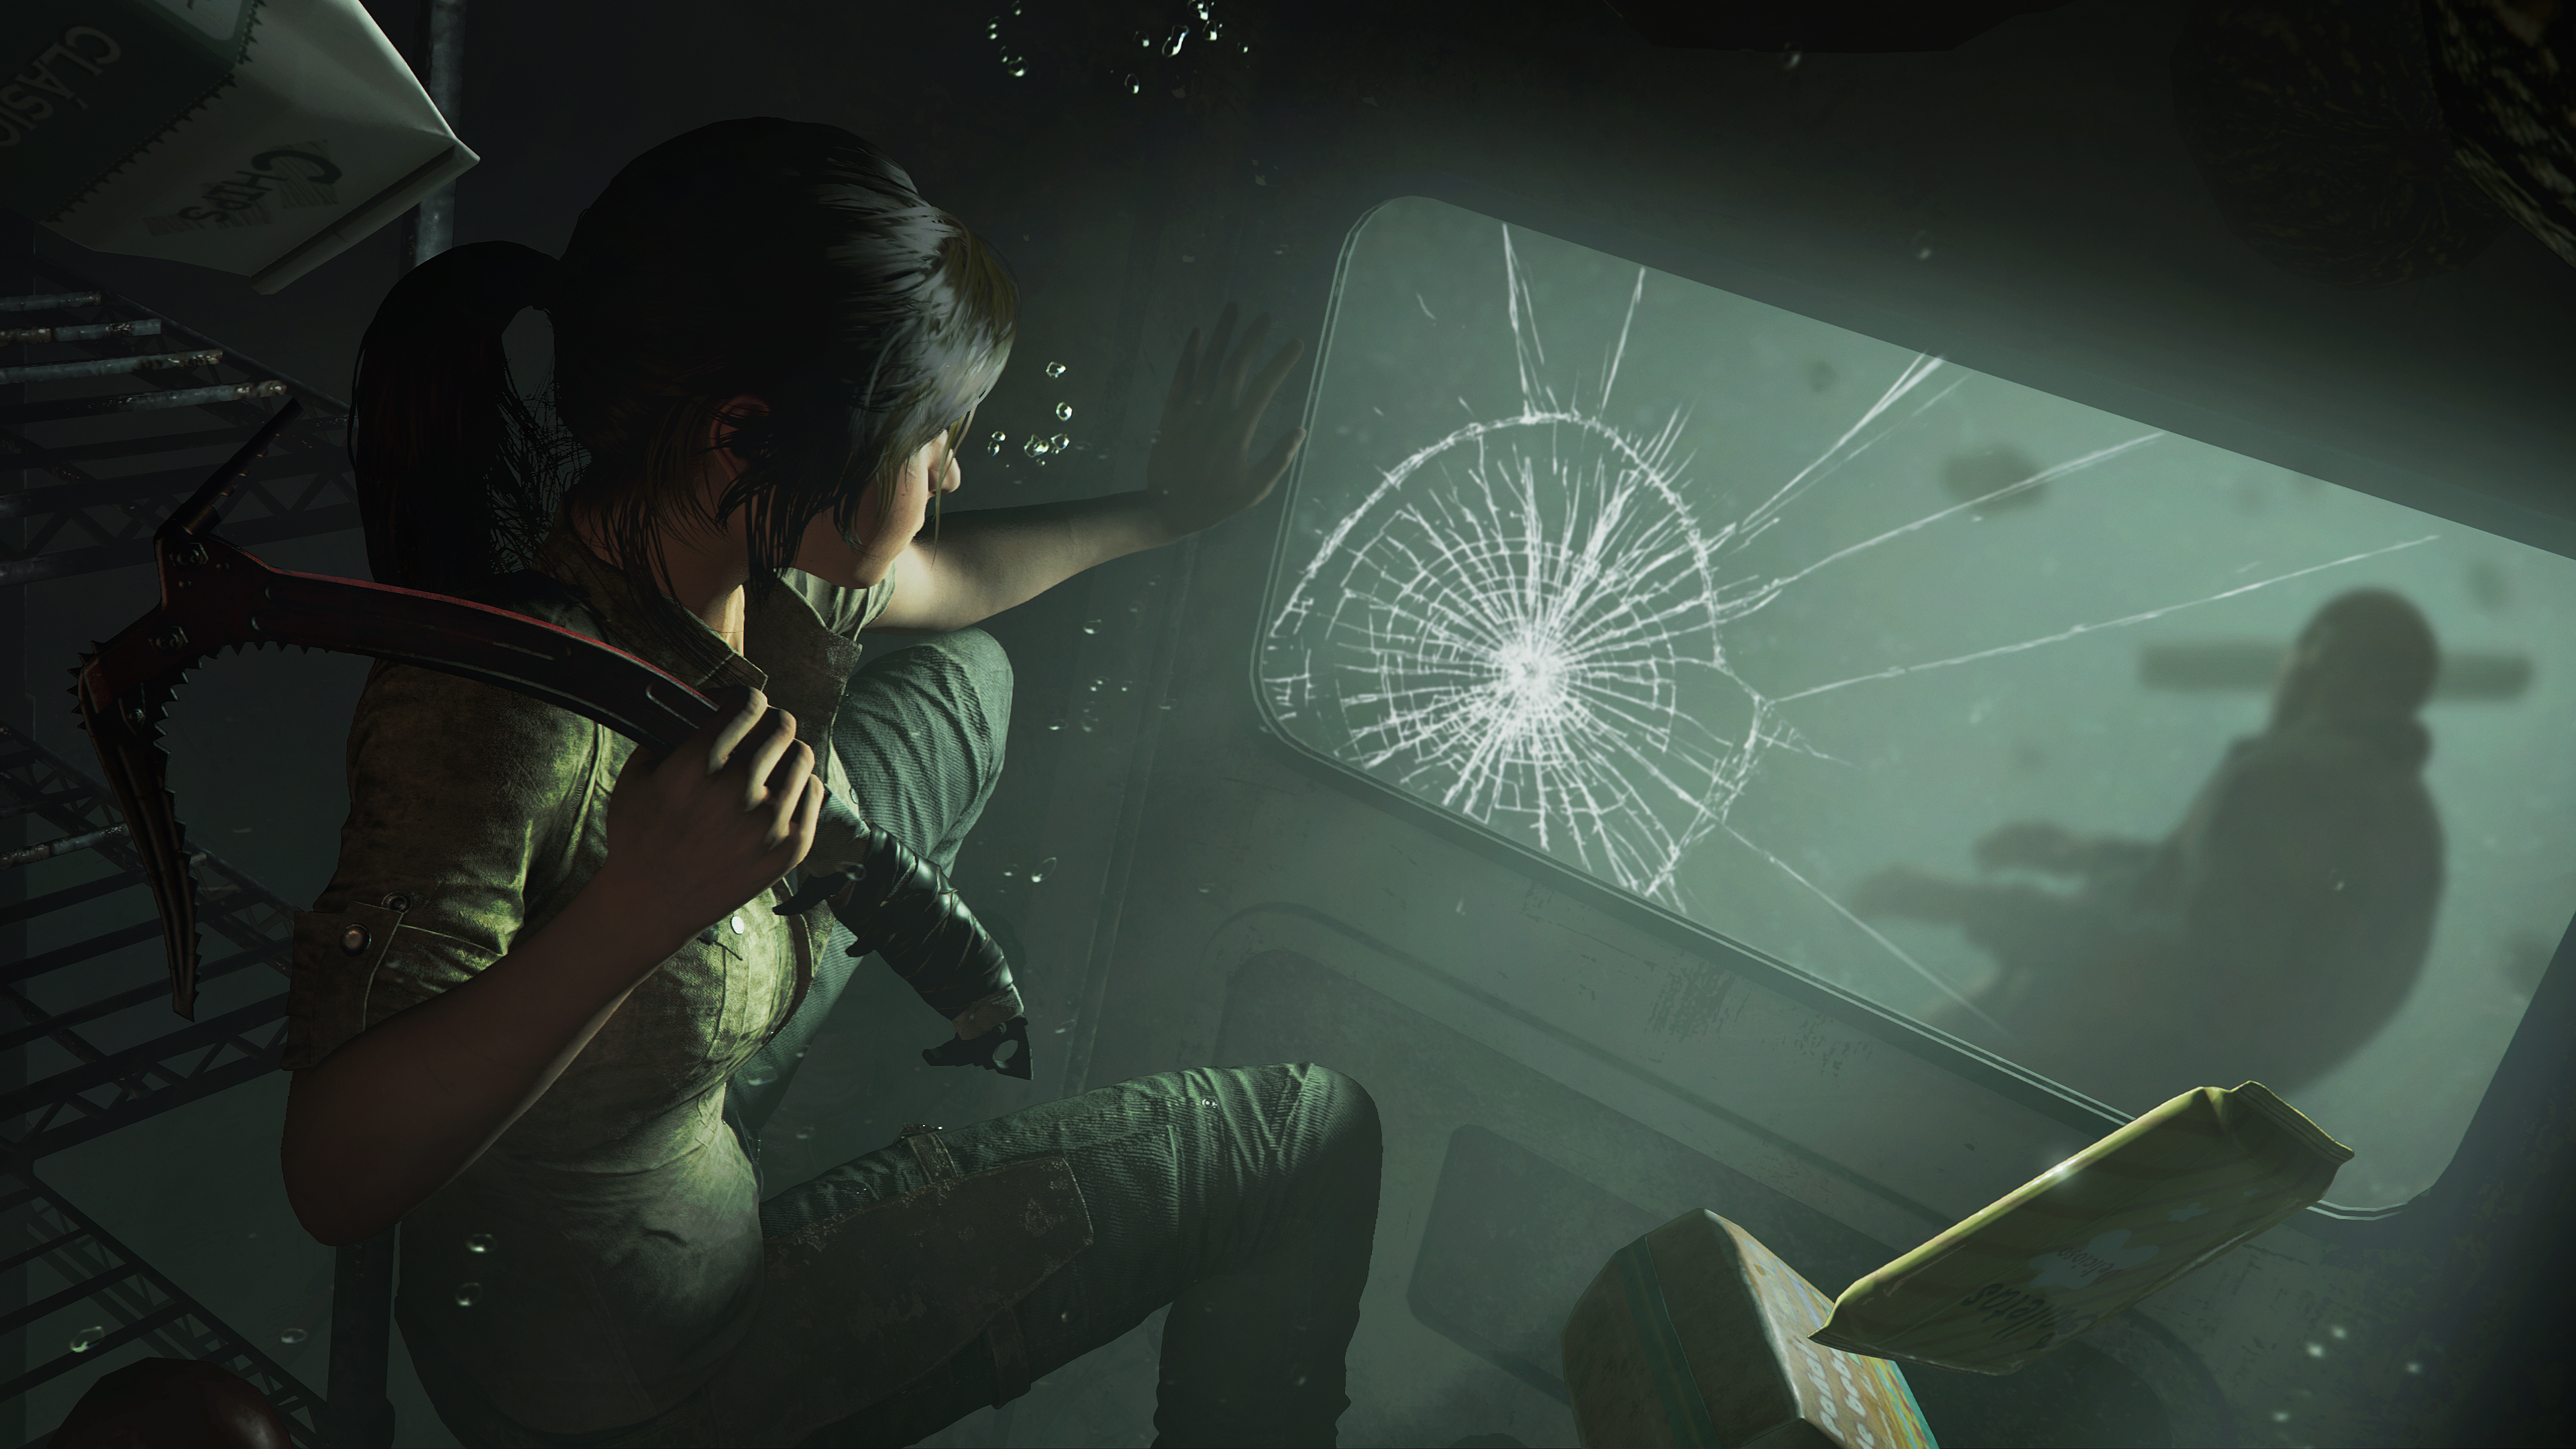 Shadow of the Tomb Raider Screenshot 04